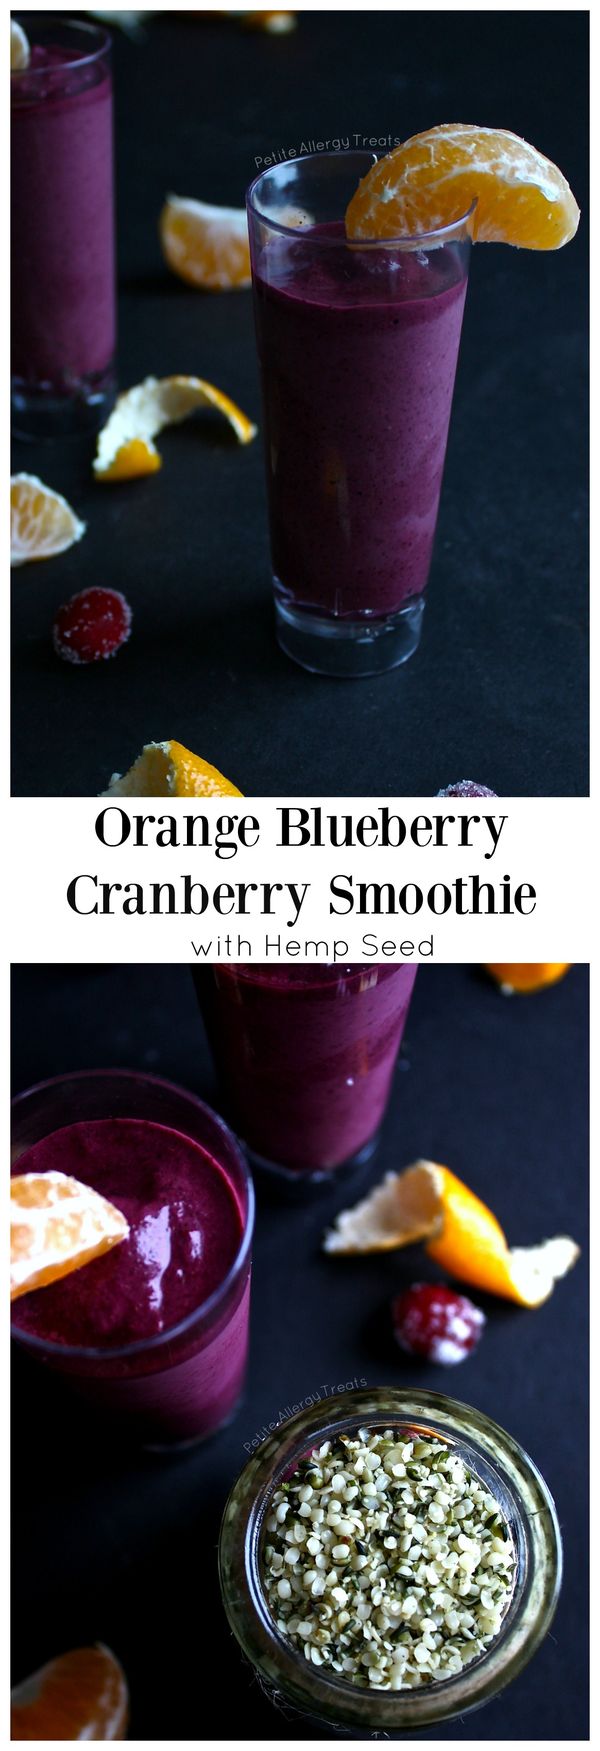 Orange Blueberry Cranberry Smoothie